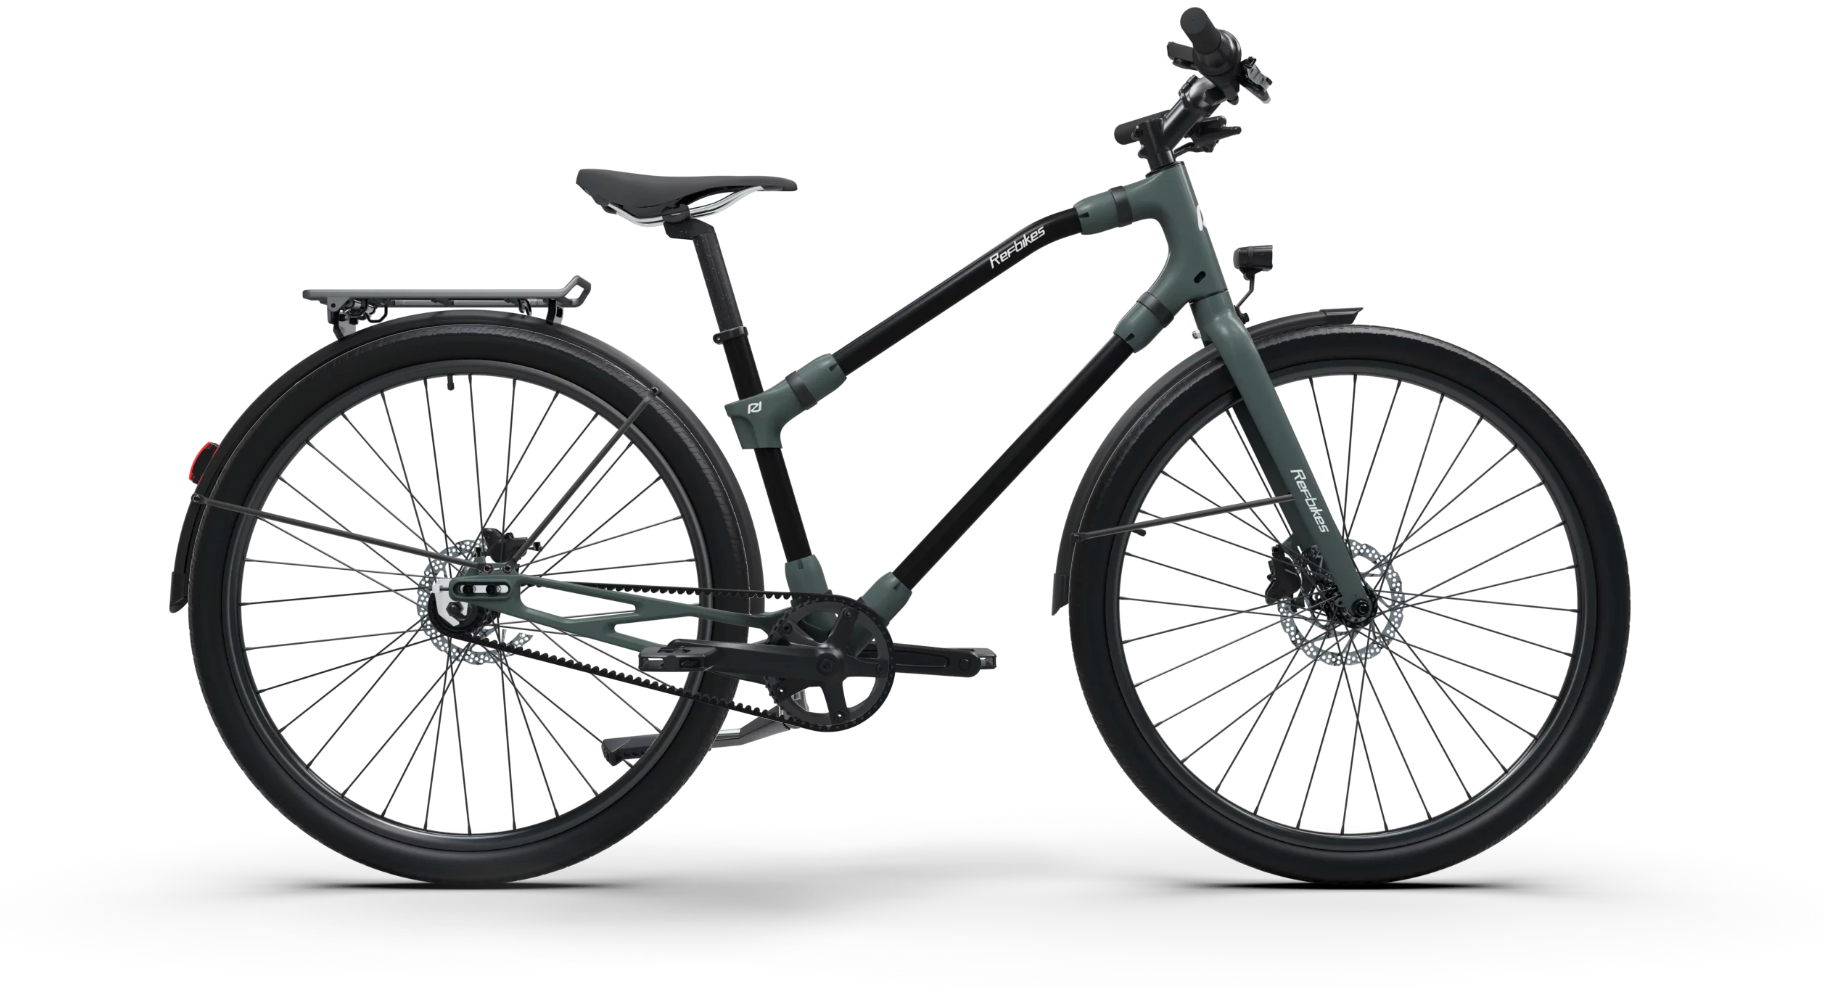 Sleek dark seafoam Ref Urban bicycle with a streamlined frame for city commuting.